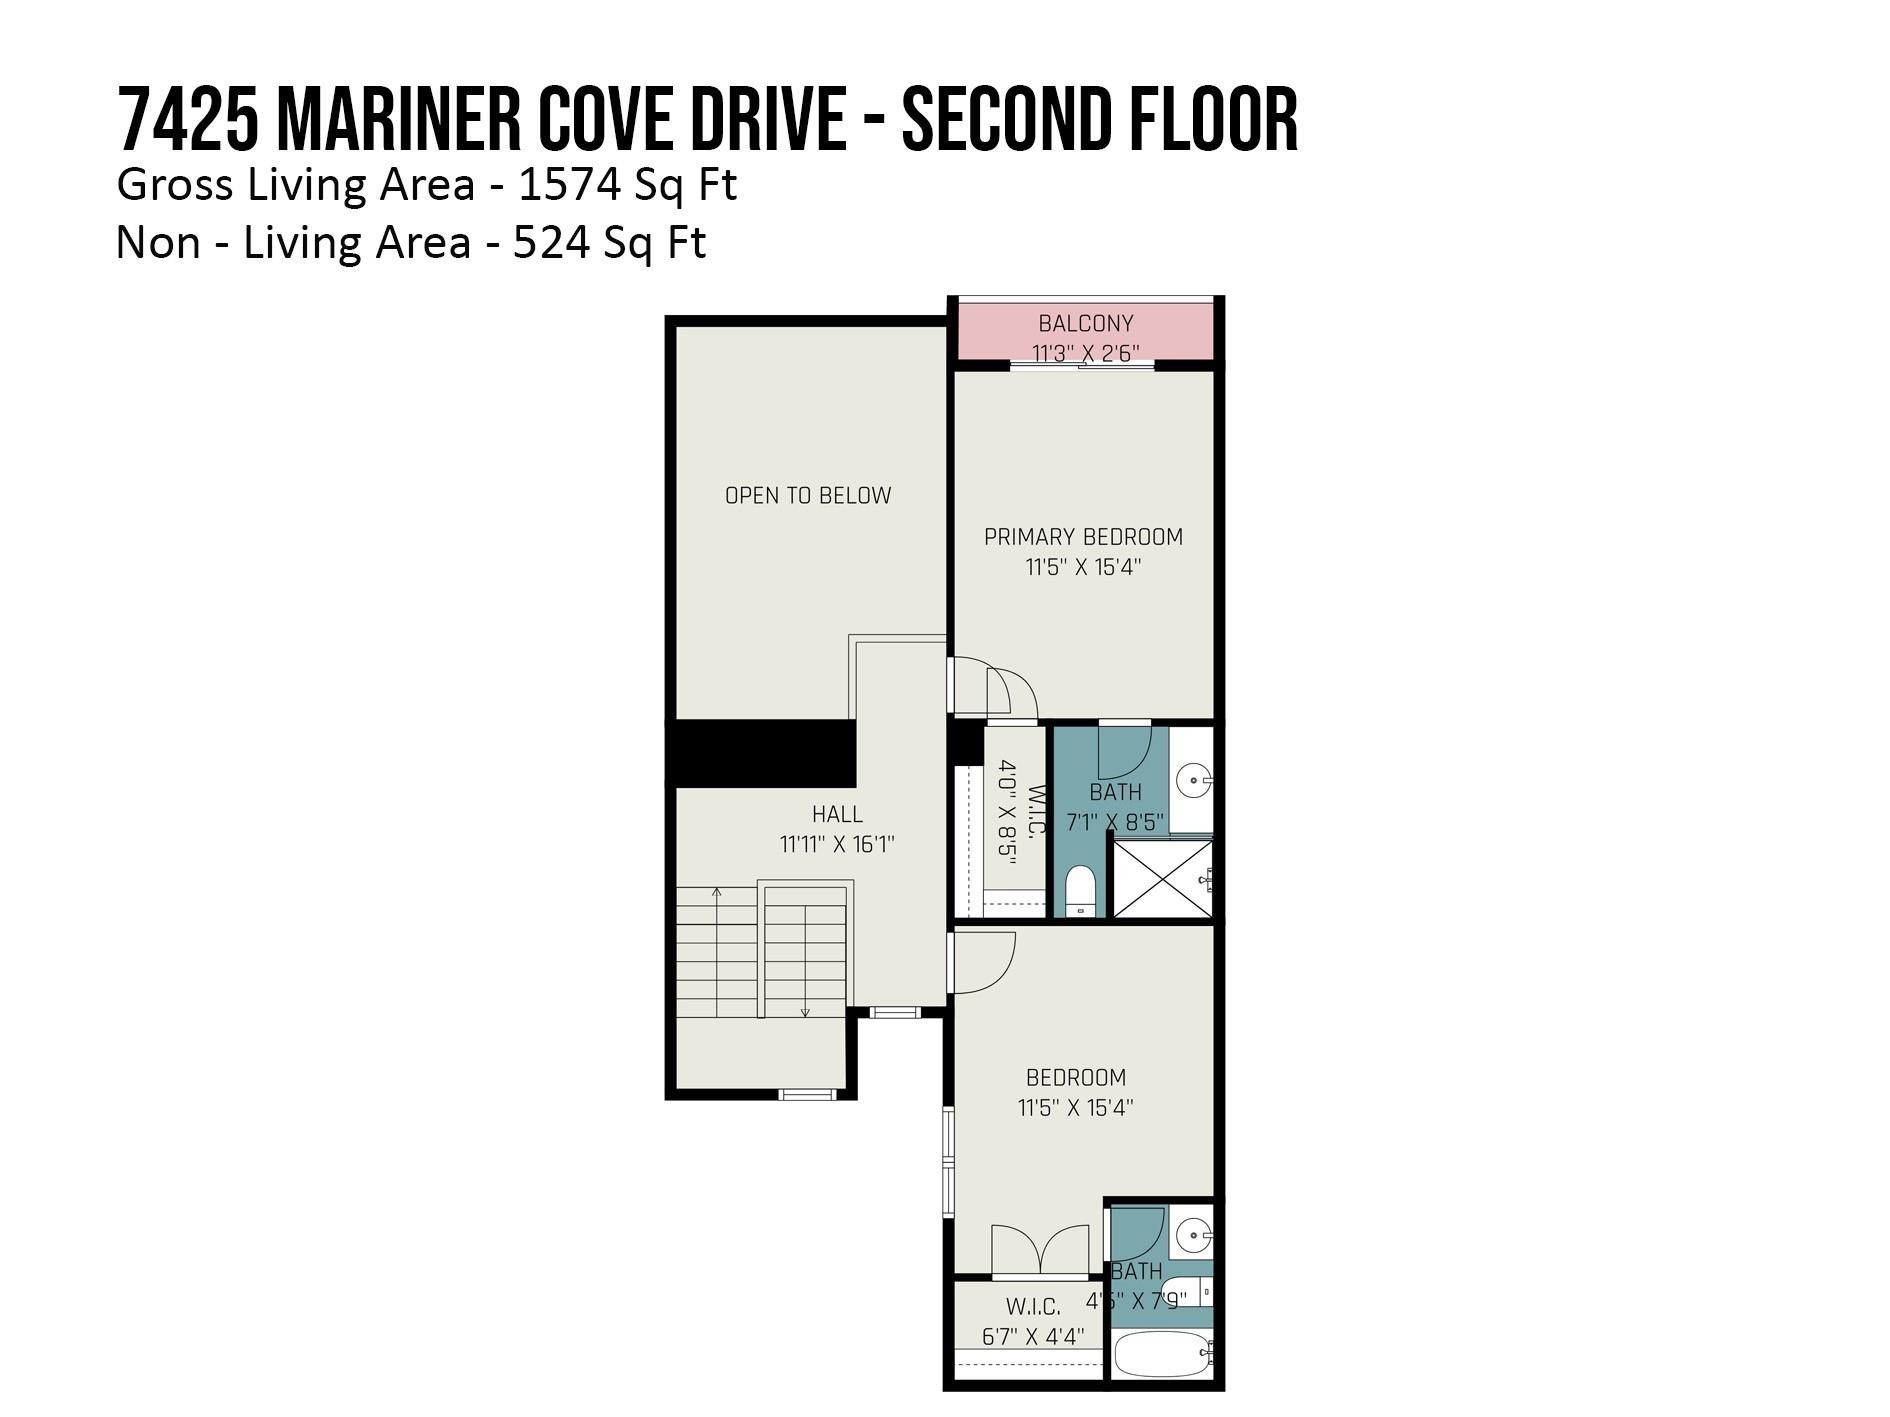 42. 7425 Mariner Cove Drive